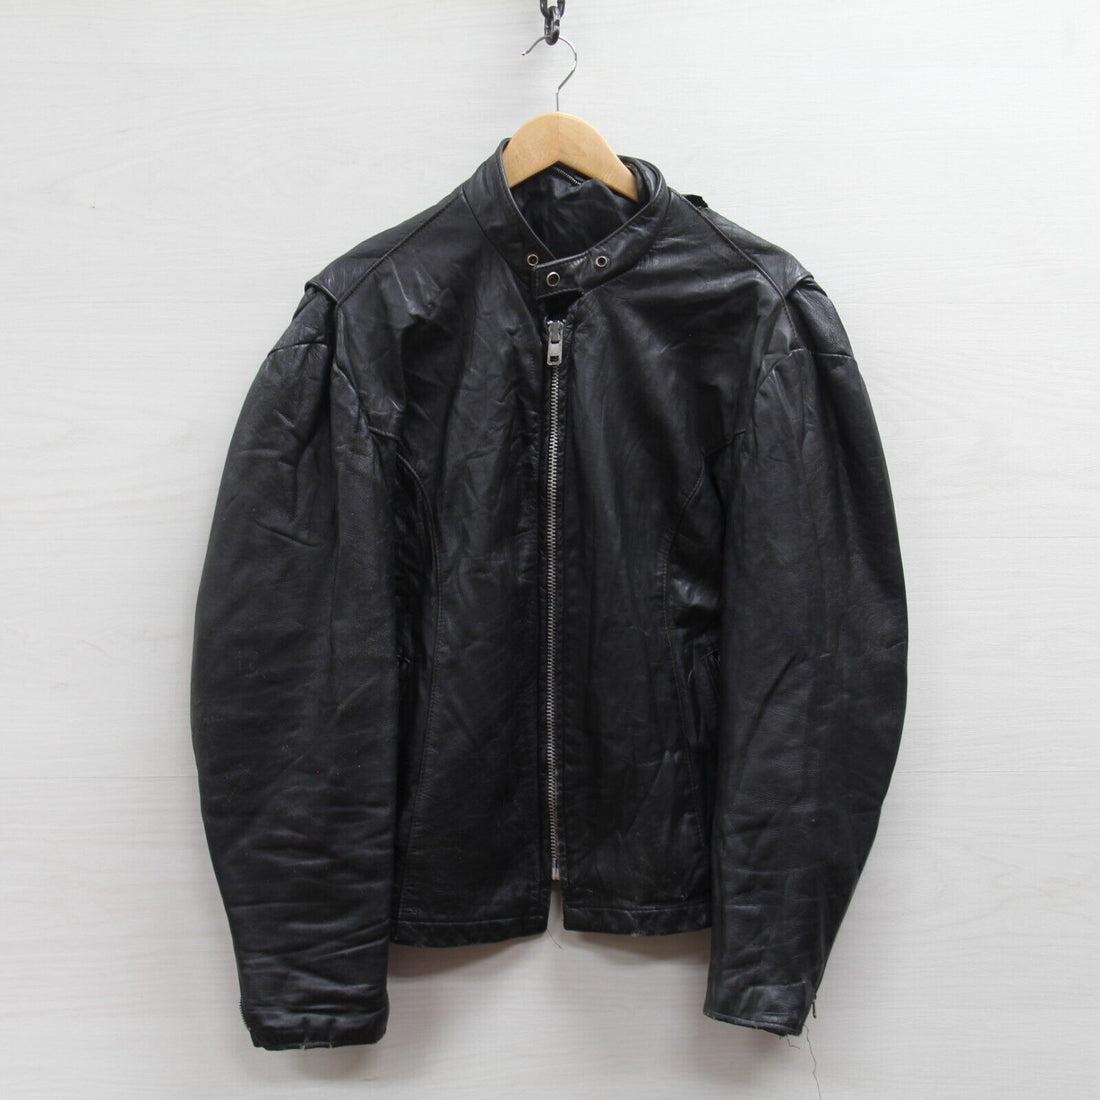 Vintage Cafe Racer Leather Motorcycle Jacket Size 46 Black Made USA Ideal Zip